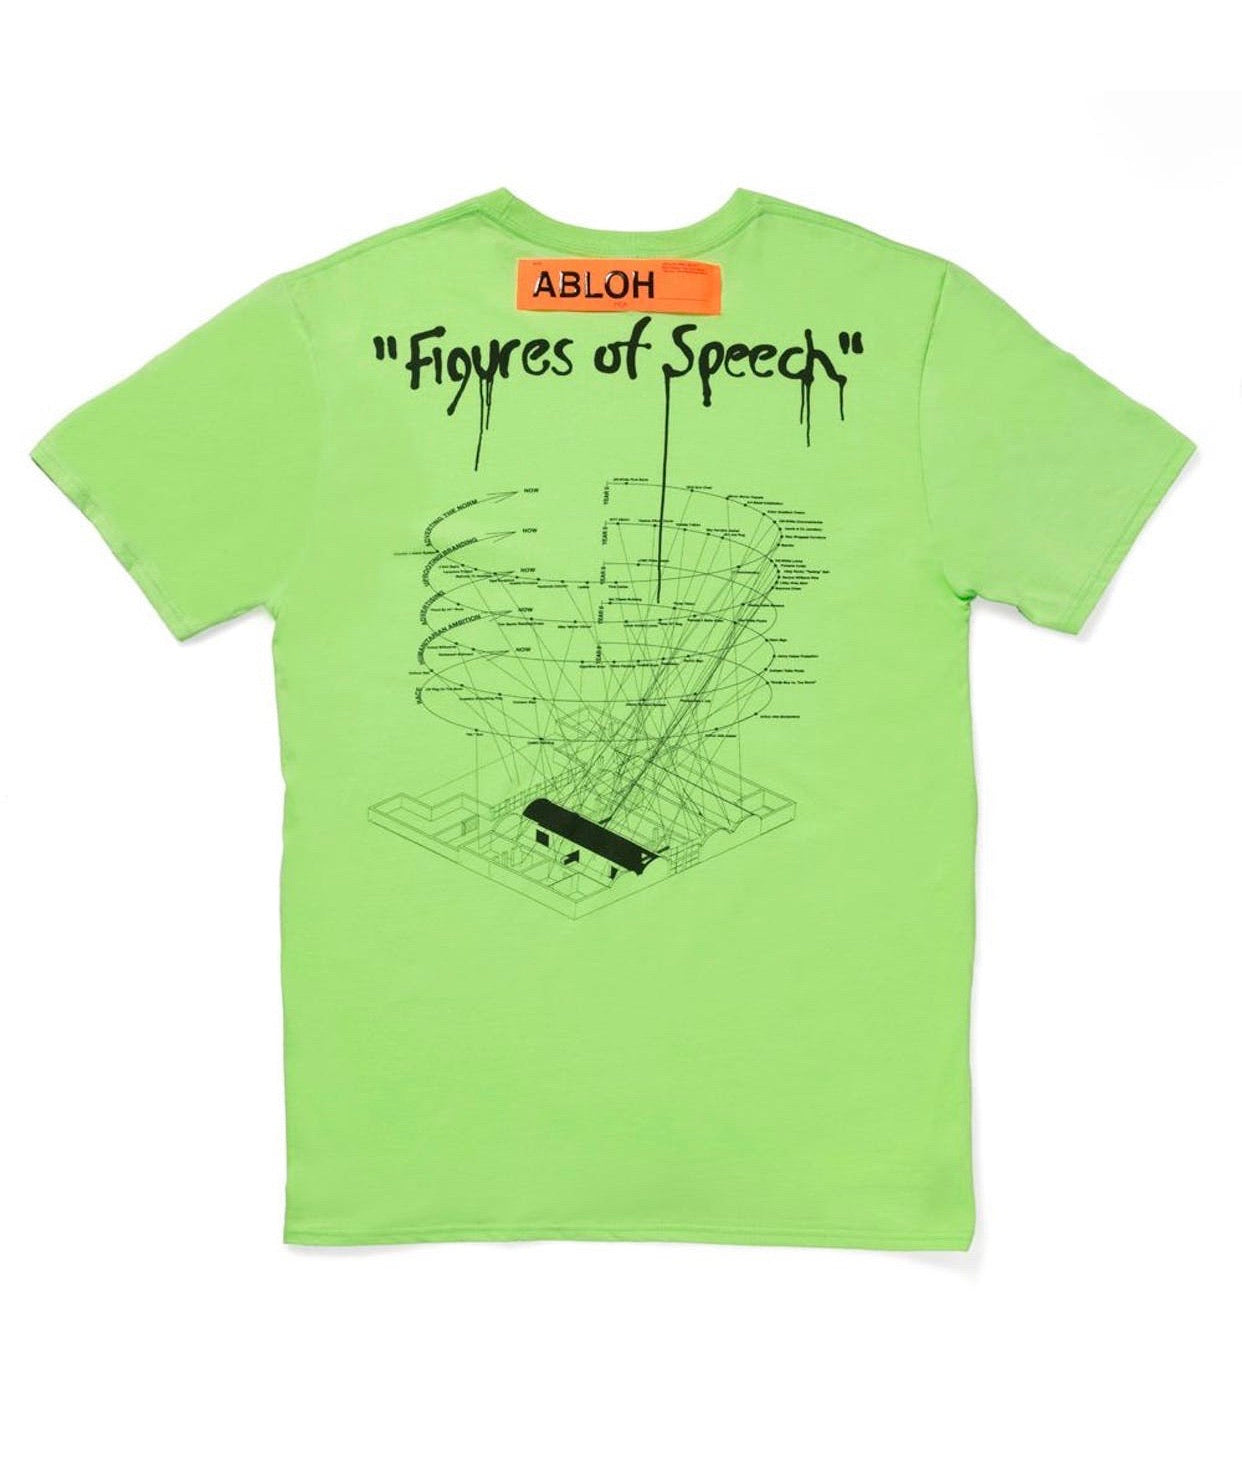 Virgil Abloh ICA Graffiti T-Shirt Green